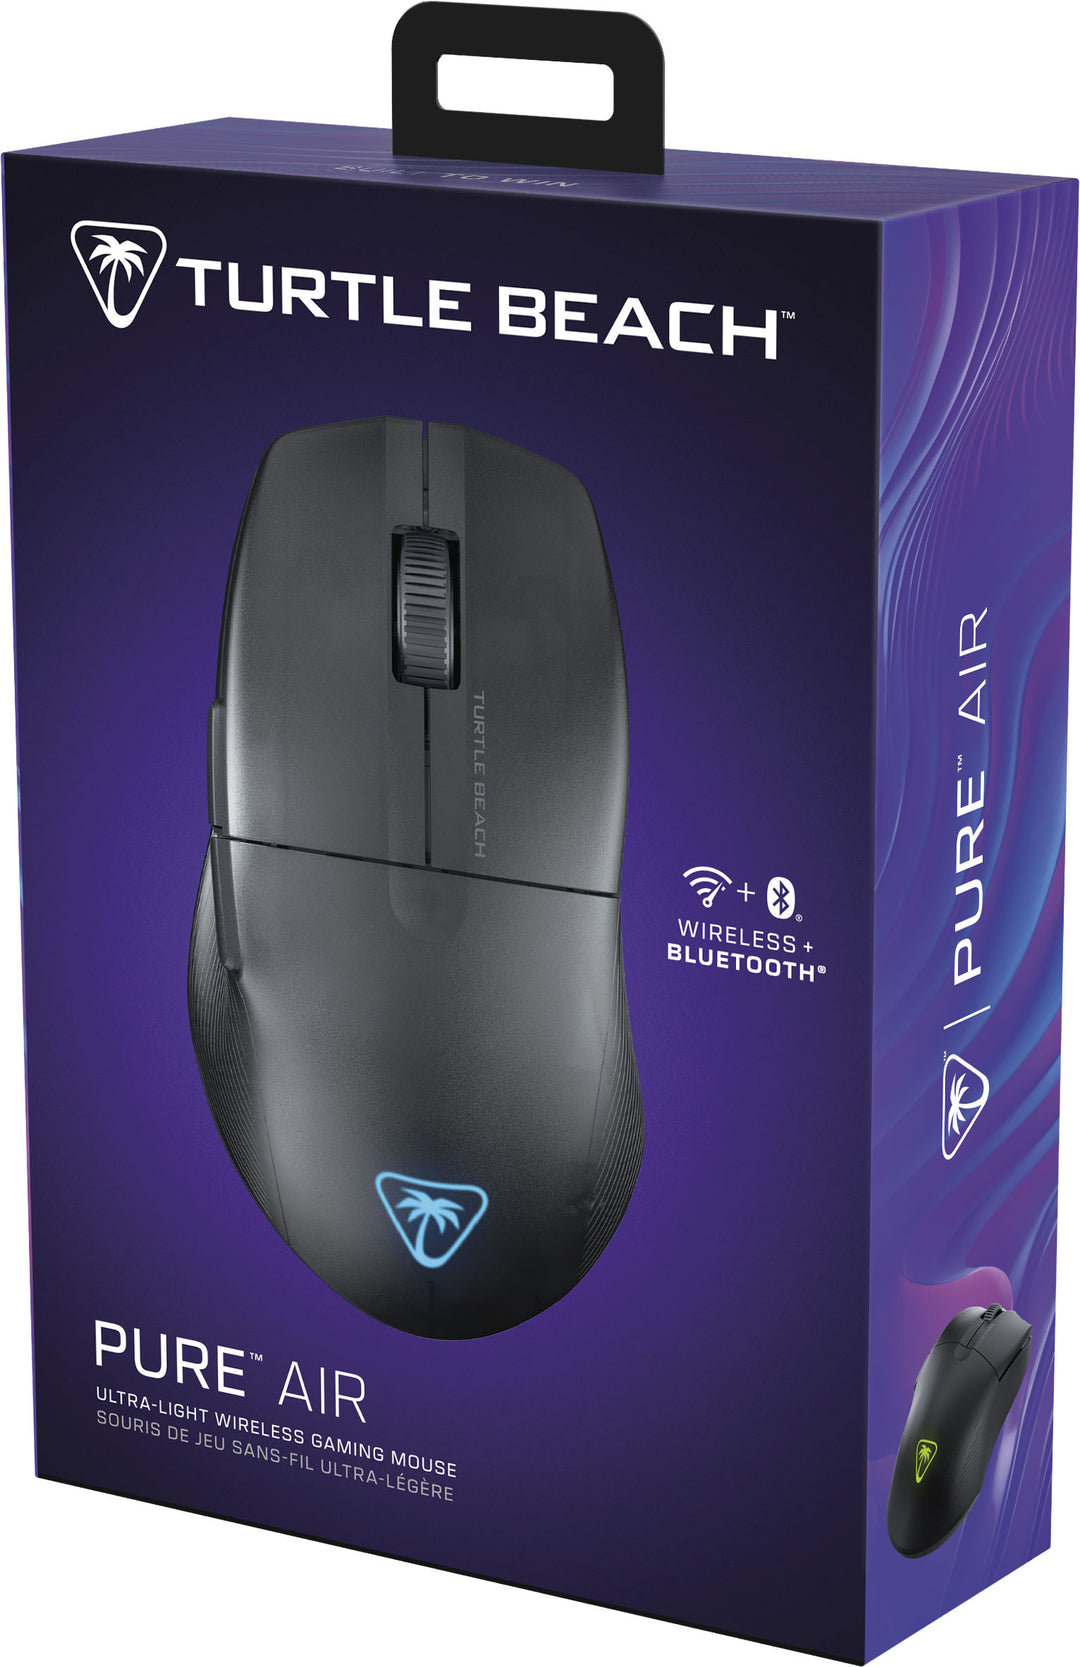 Turtle Beach - Pure Air Ultra-Light Wireless Ergonomic RGB Gaming Mouse with 26K DPI Optical Sensor & 125 hour Battery - Black_7